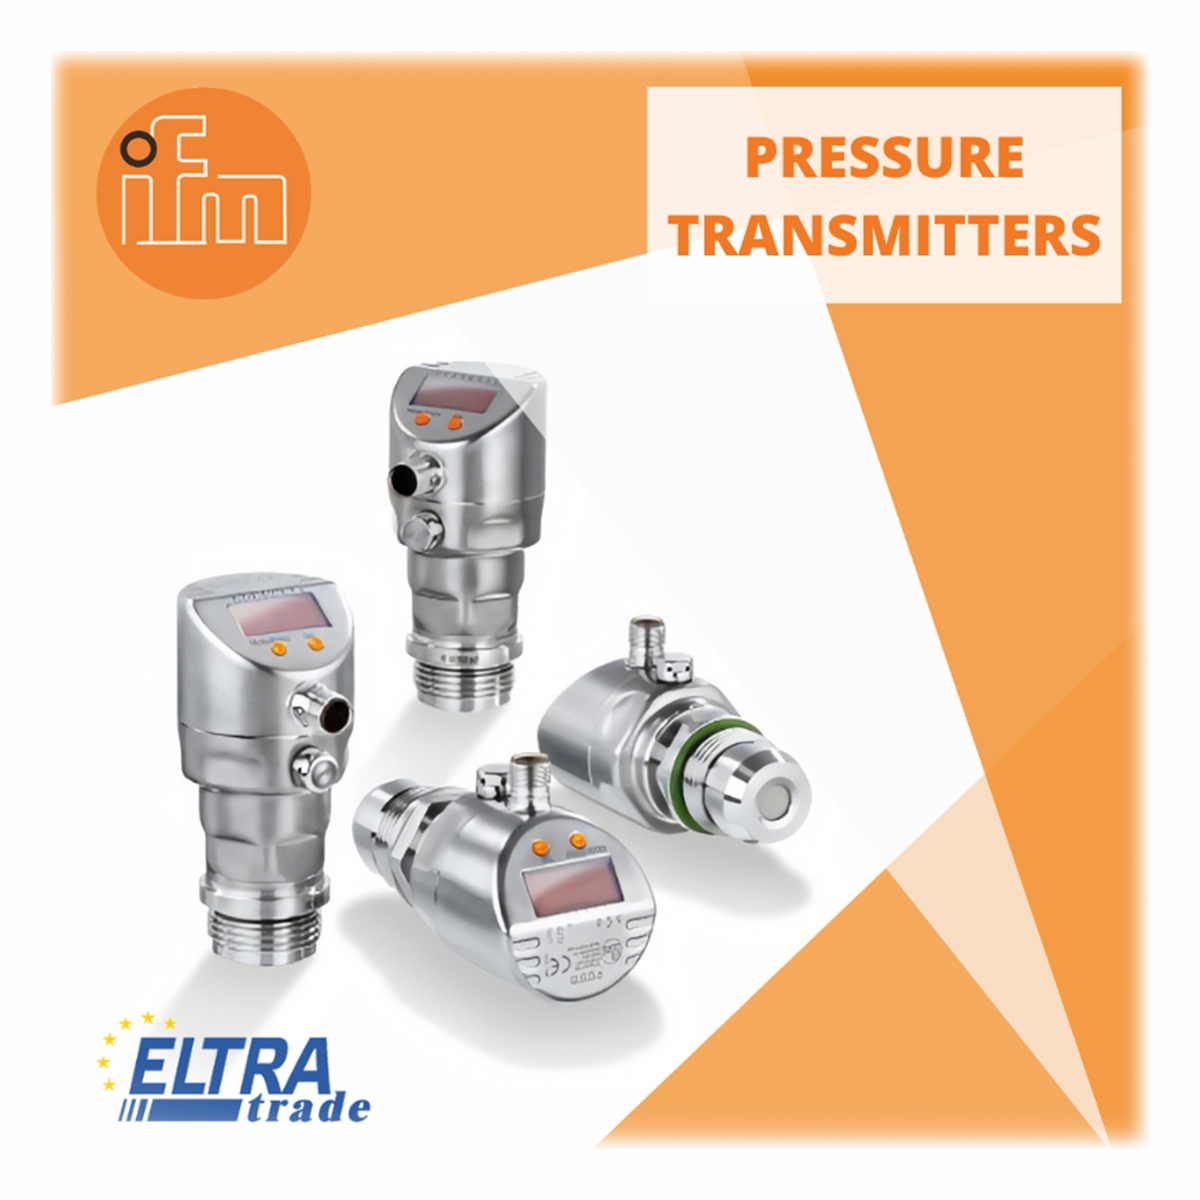 ifm pressure transmitters photo